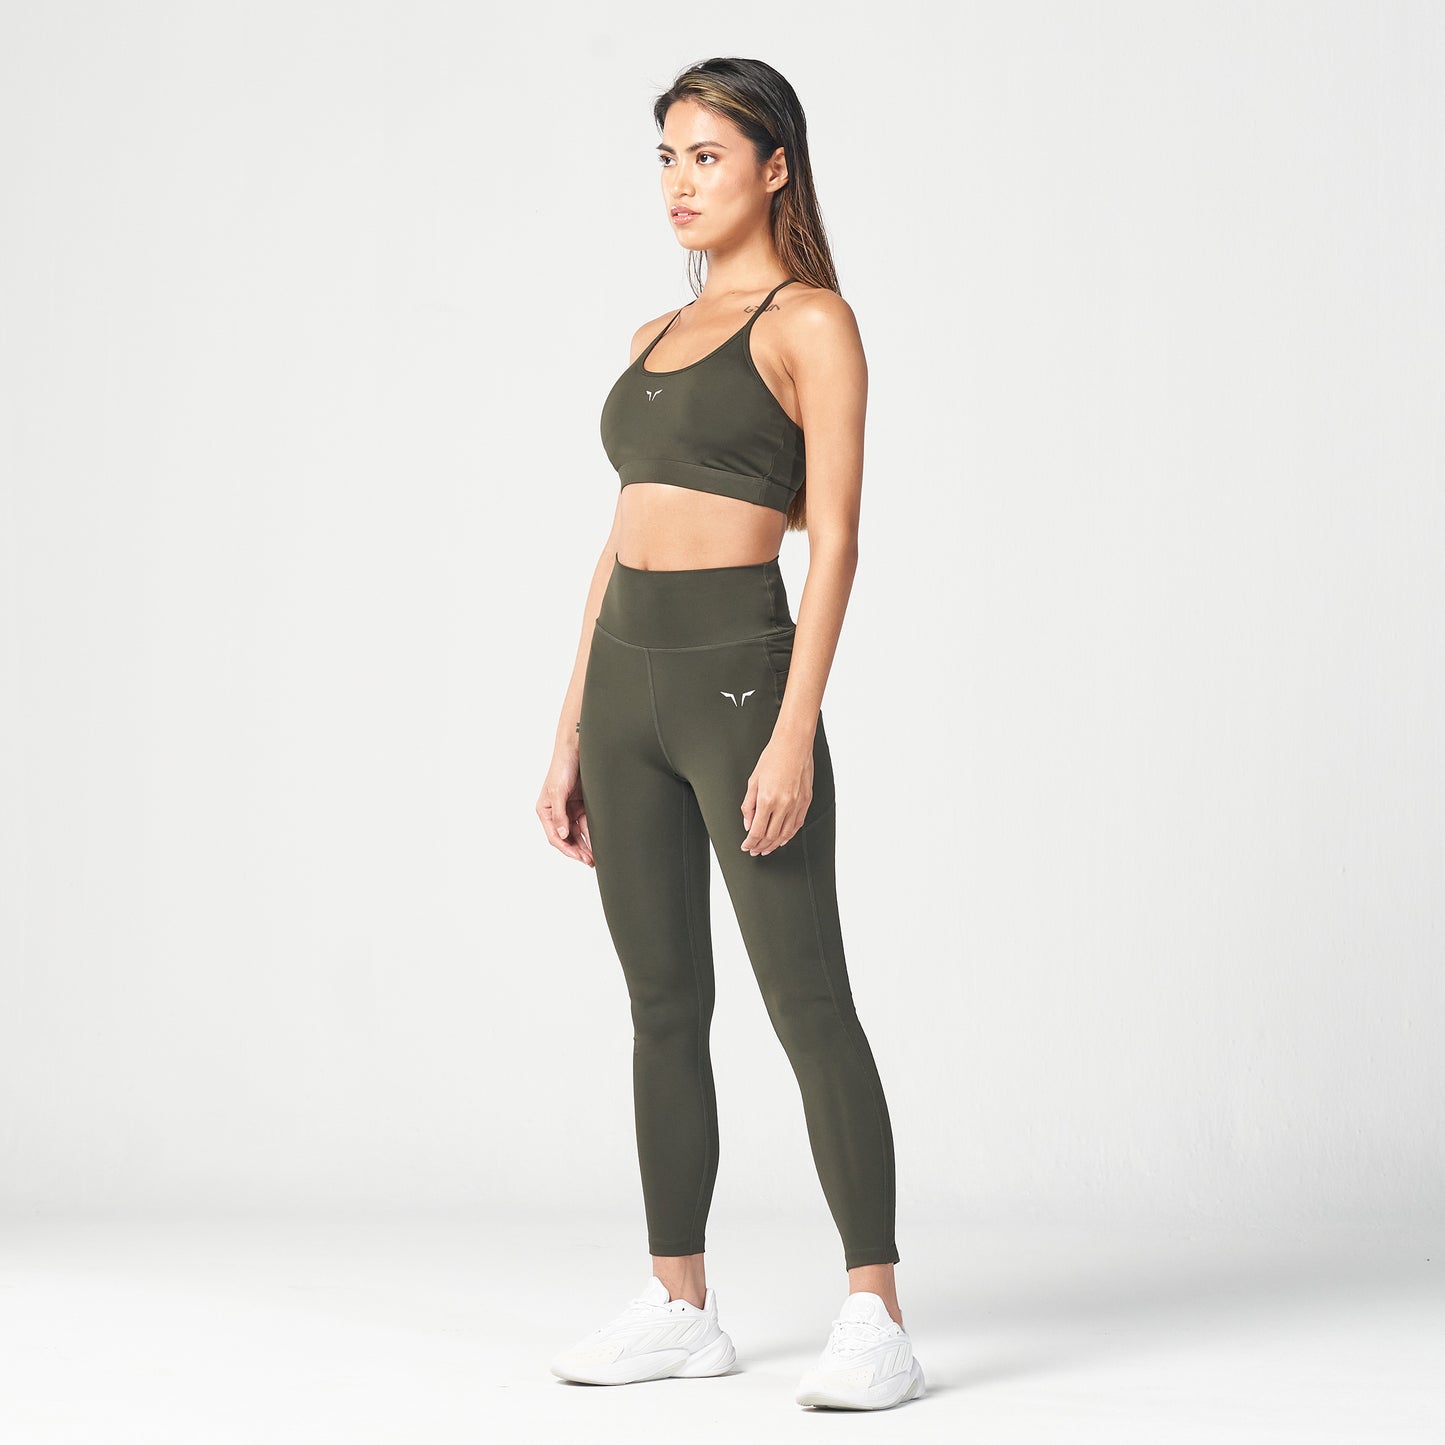 squatwolf-workout-clothes-essential-low-impact-bra-khaki-sports-bra-for-gym